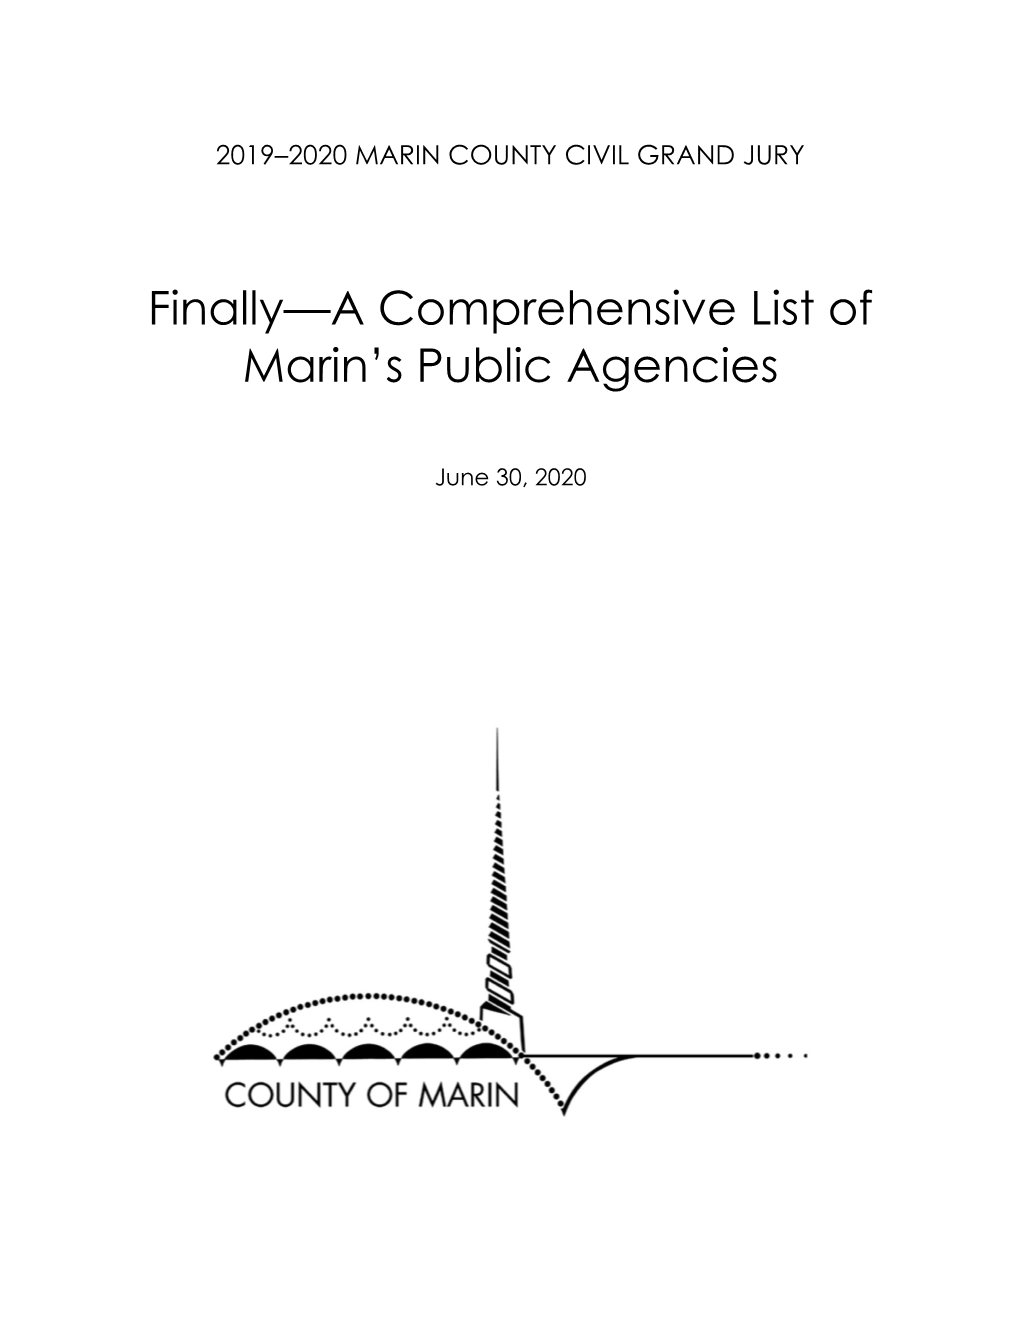 Finally—A Comprehensive List of Marin's Public Agencies